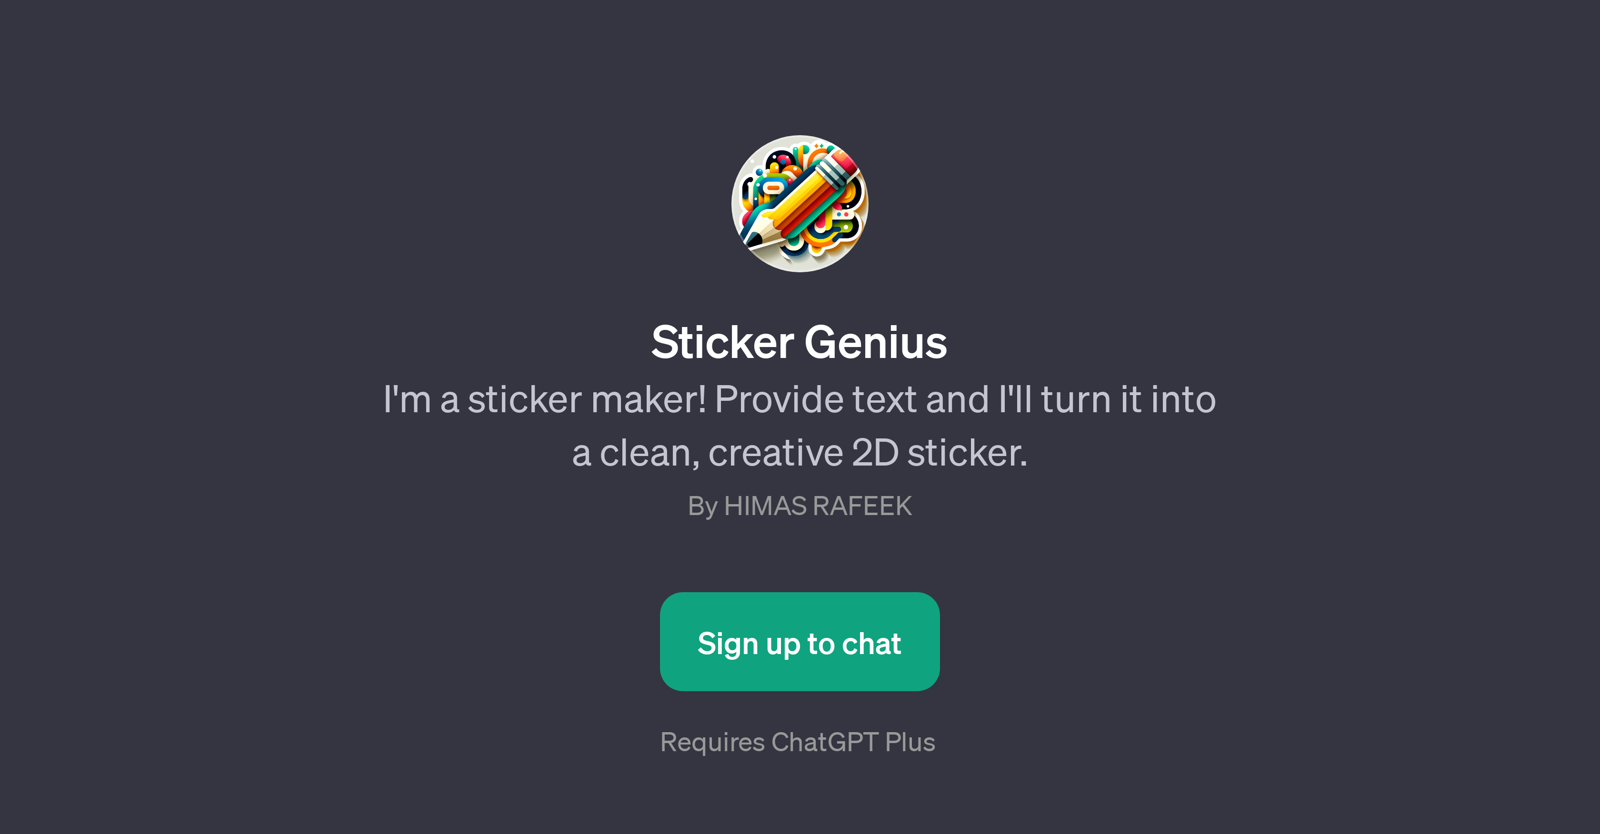 Sticker Genius website